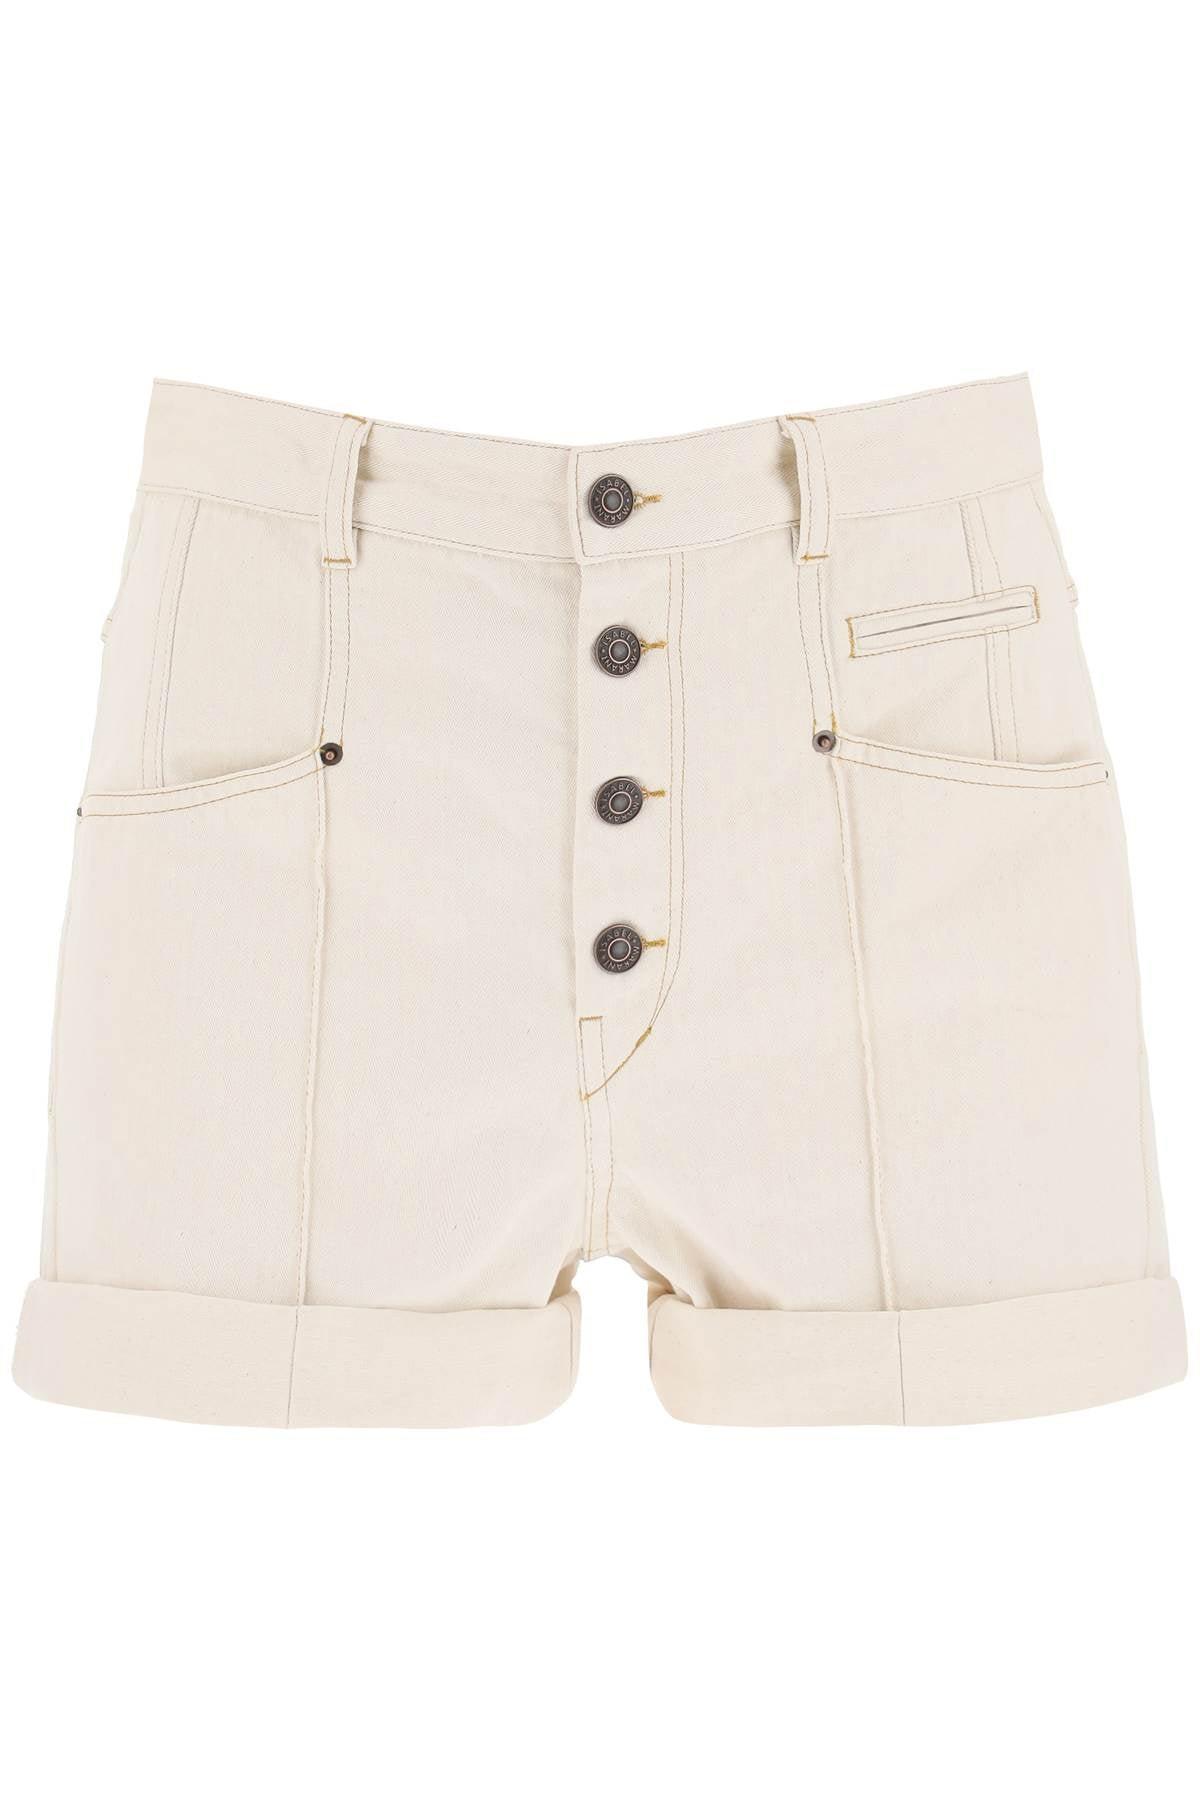 Isabel Marant Button Detailed Shorts